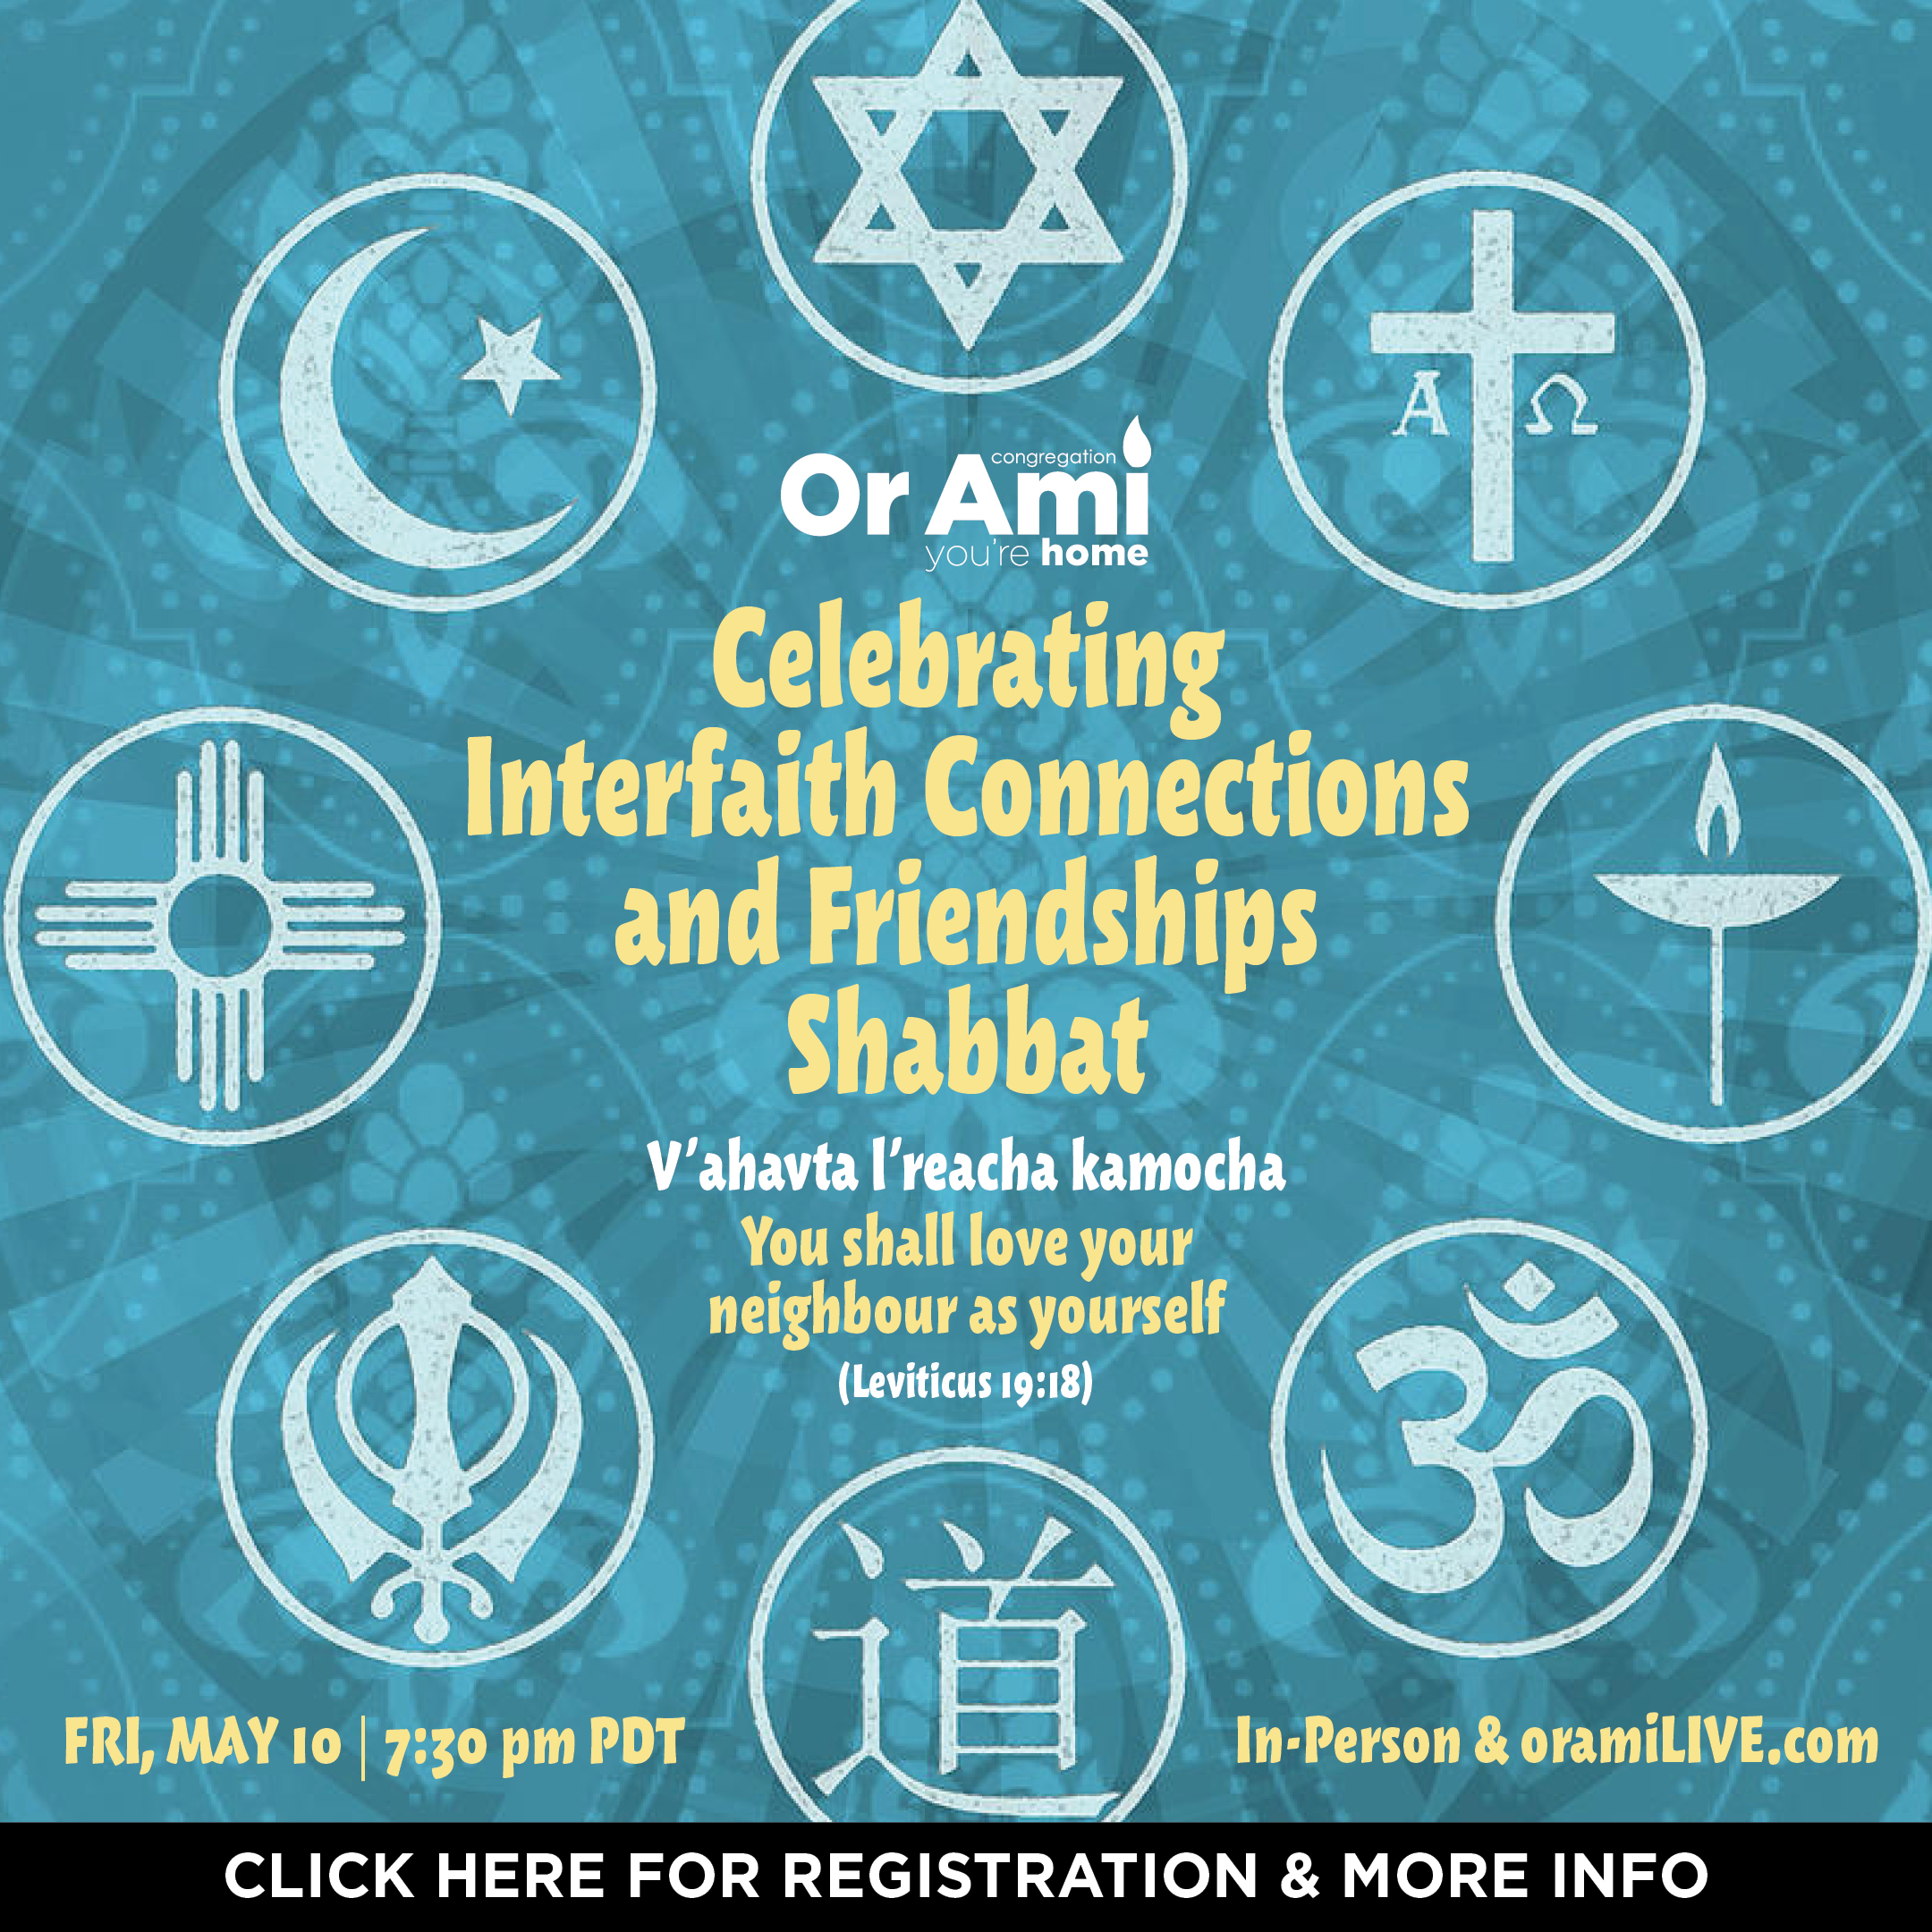 *COA Celebrating Interfaith Connections CLICK